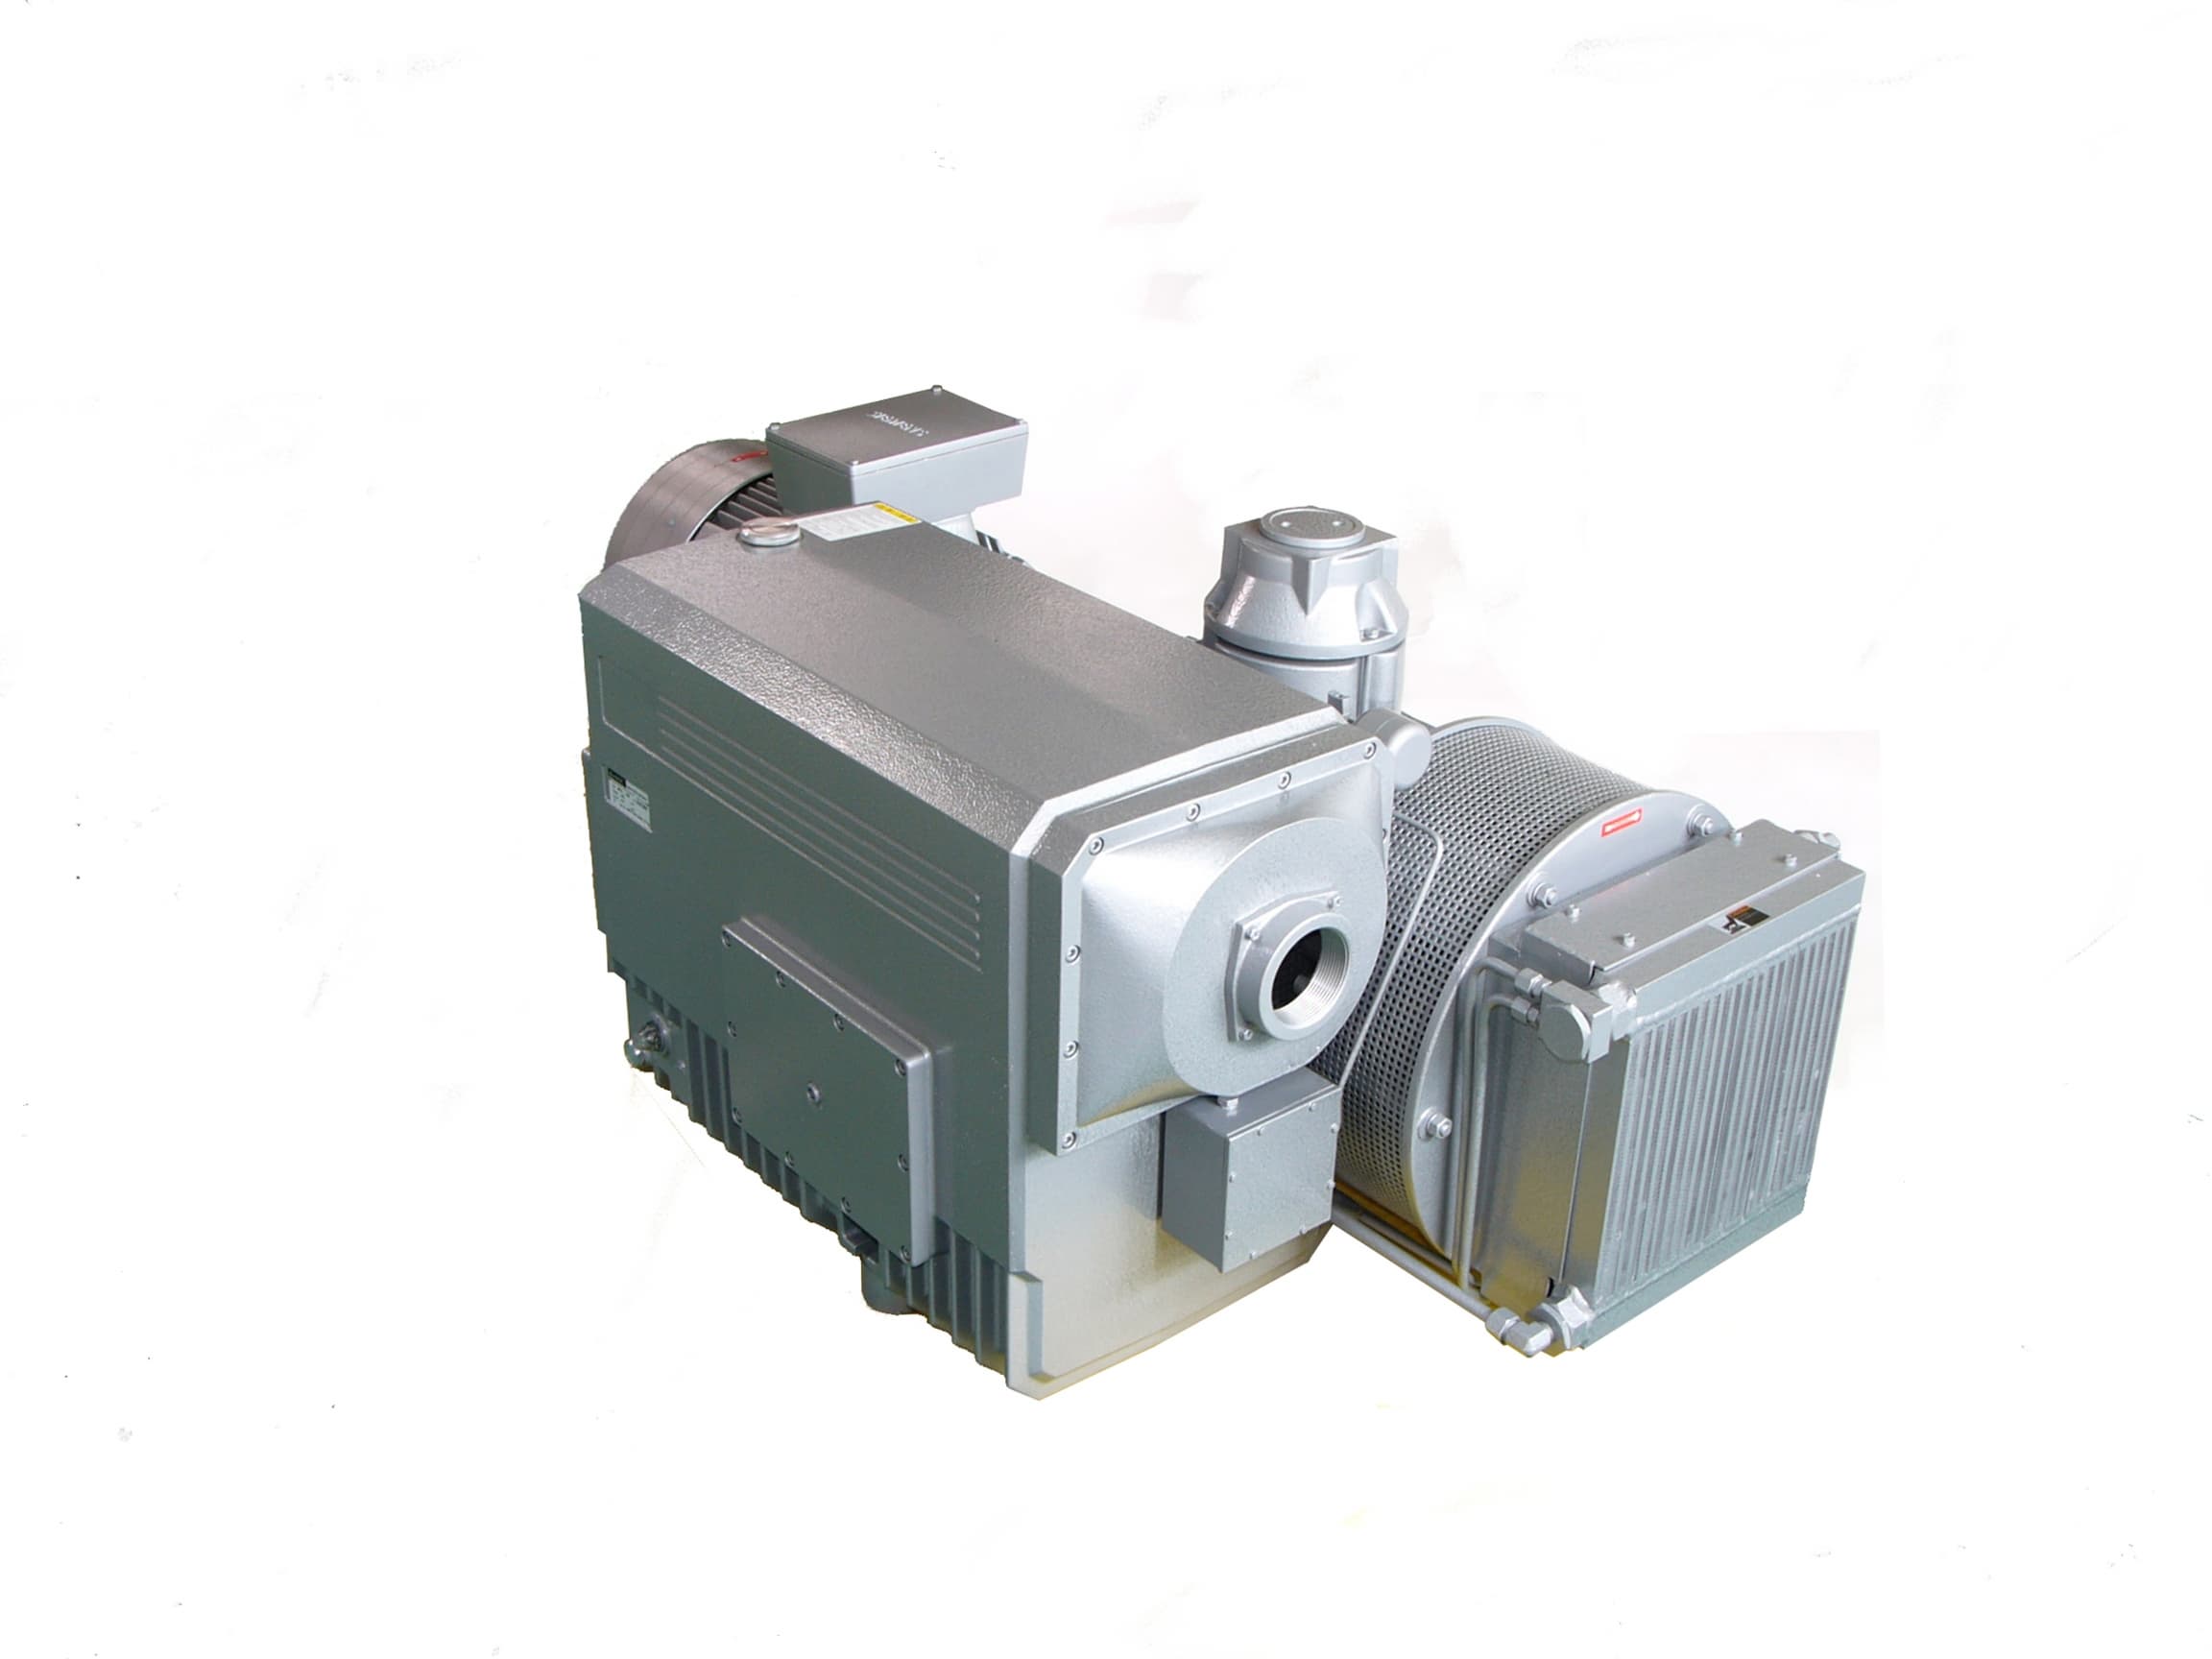 MVO_630 for vacuum pump